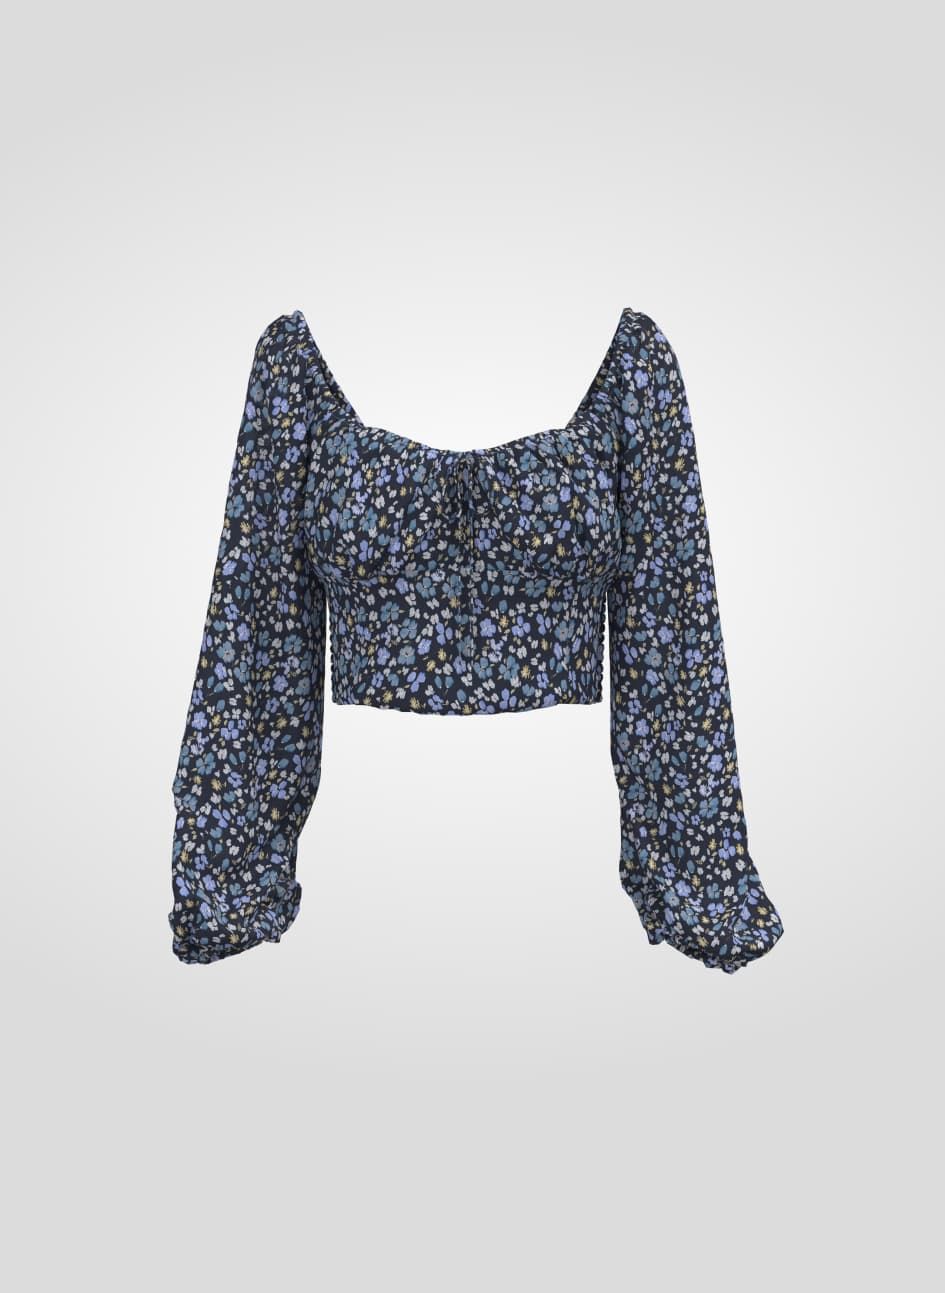 A blue long sleeve floral blouse.